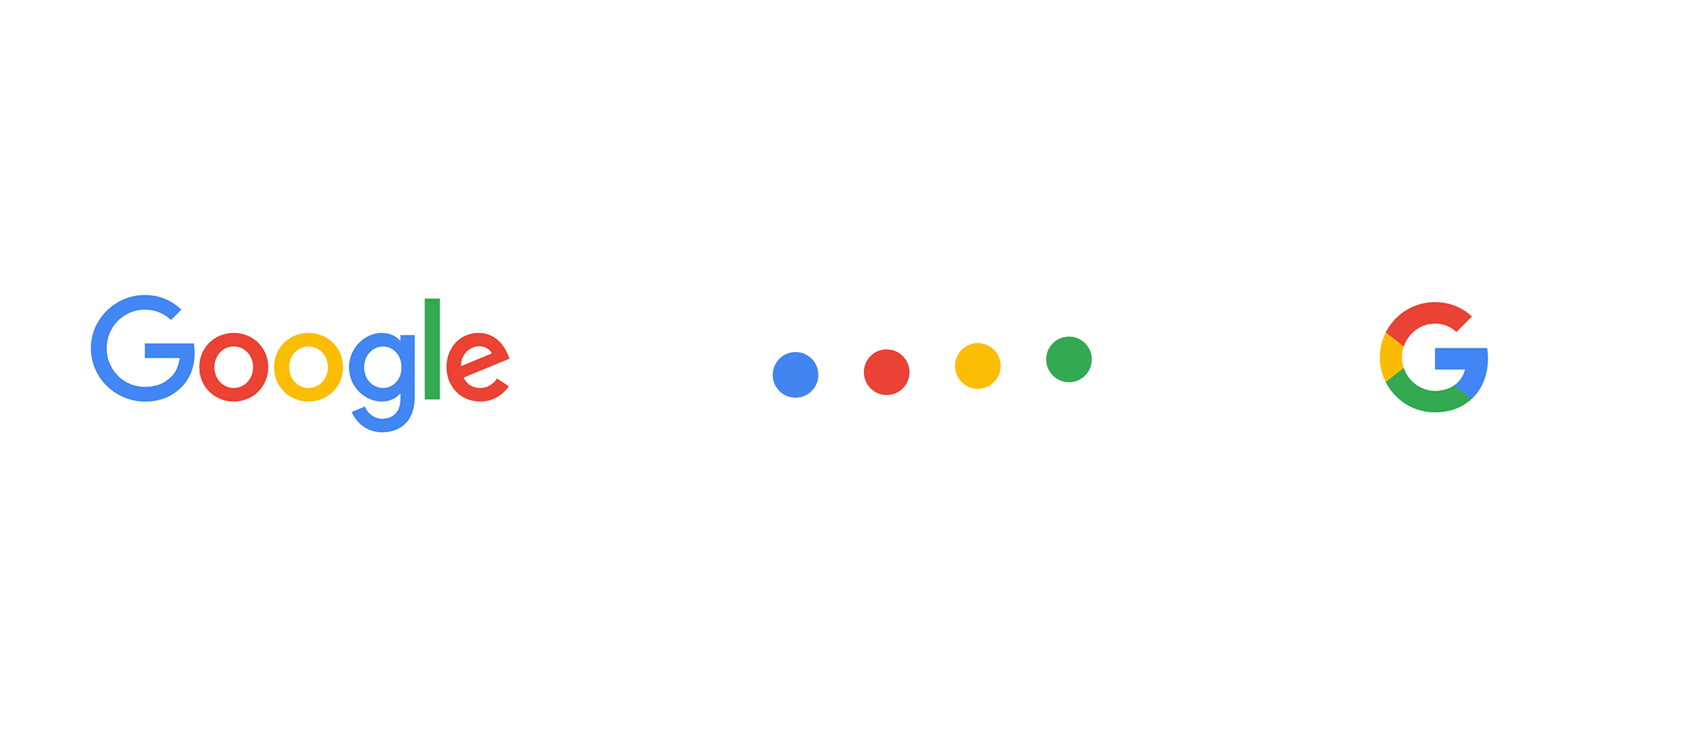 Google G Logo - Evolving the Google Identity - Library - Google Design